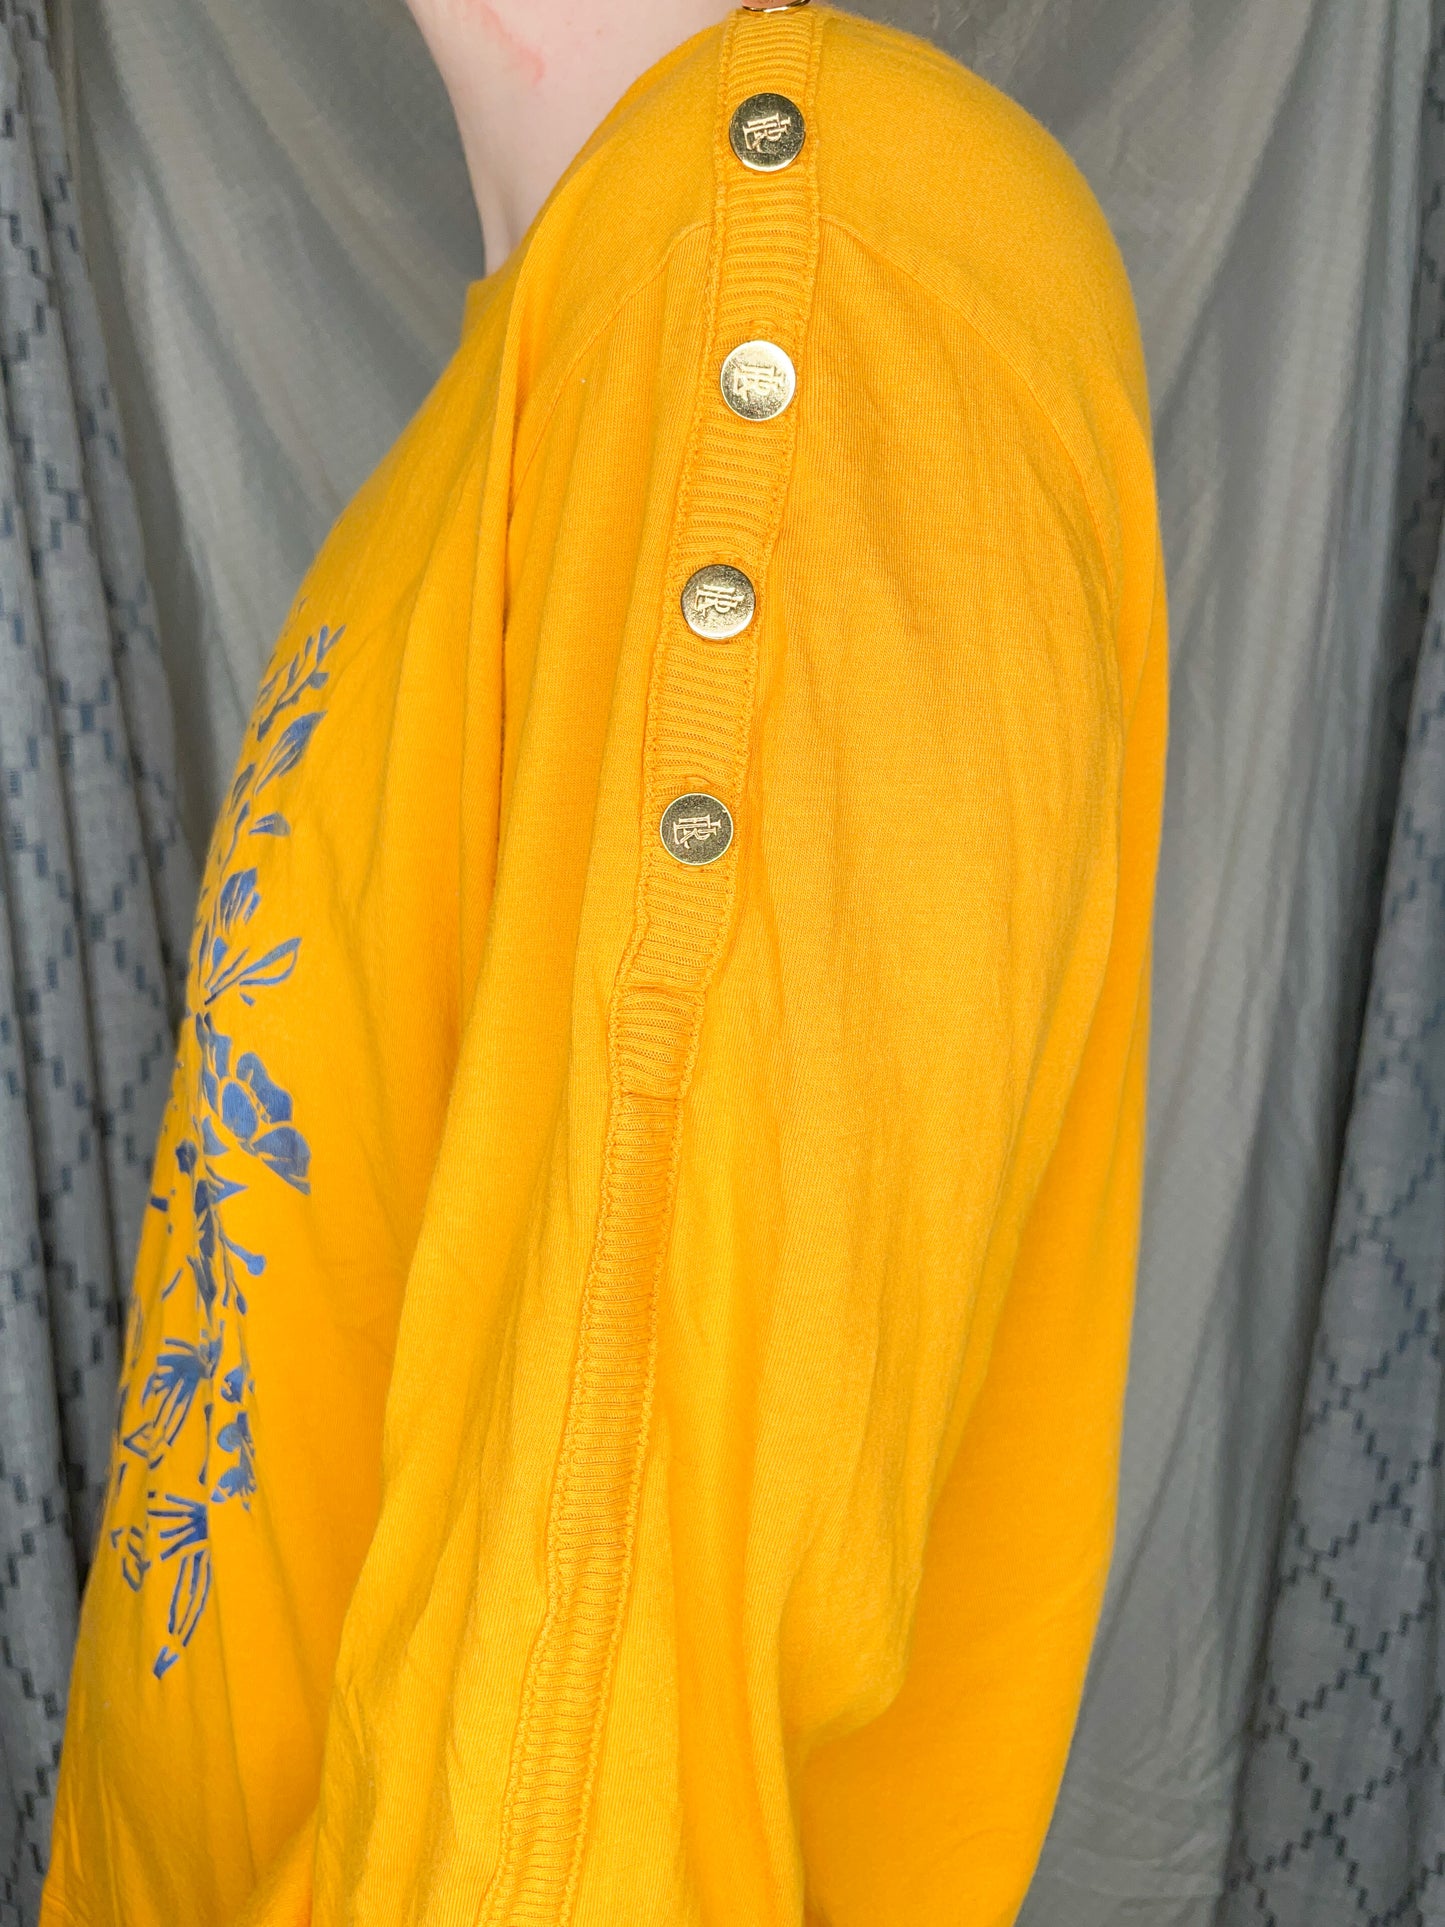 Ralph Lauren Upcycled Mustard Yellow Lion Cotton Modal Ruffle Sleeve Top - XL